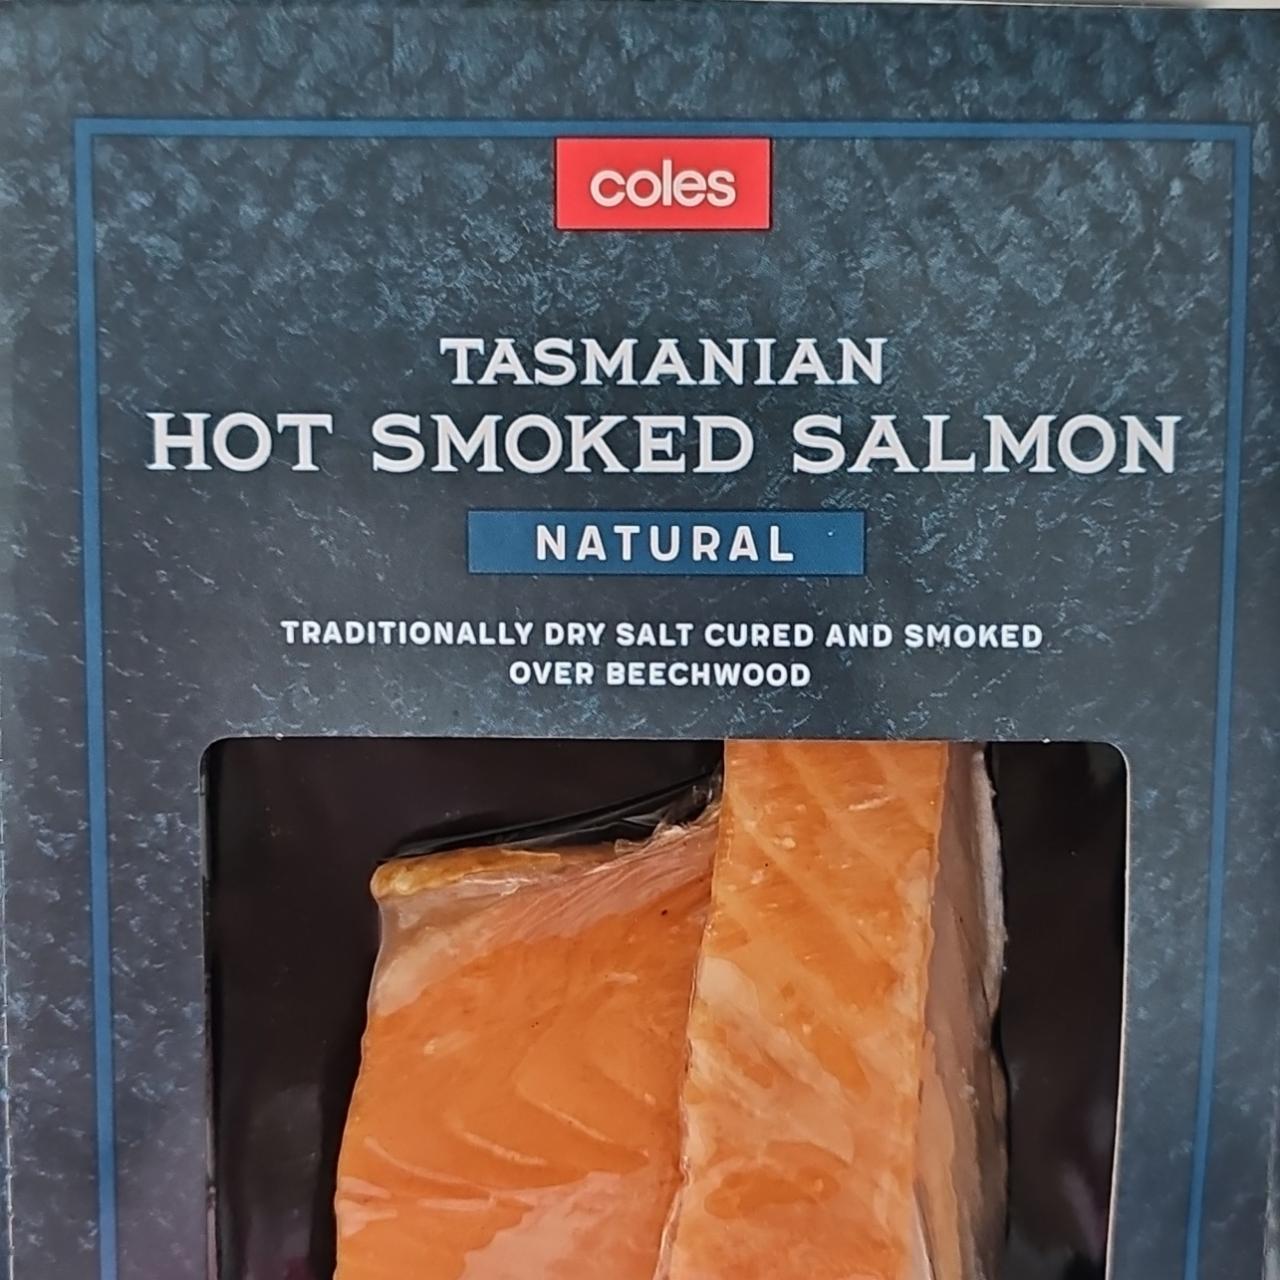 Fotografie - Tasmanian Hot smoked salmon natural Coles